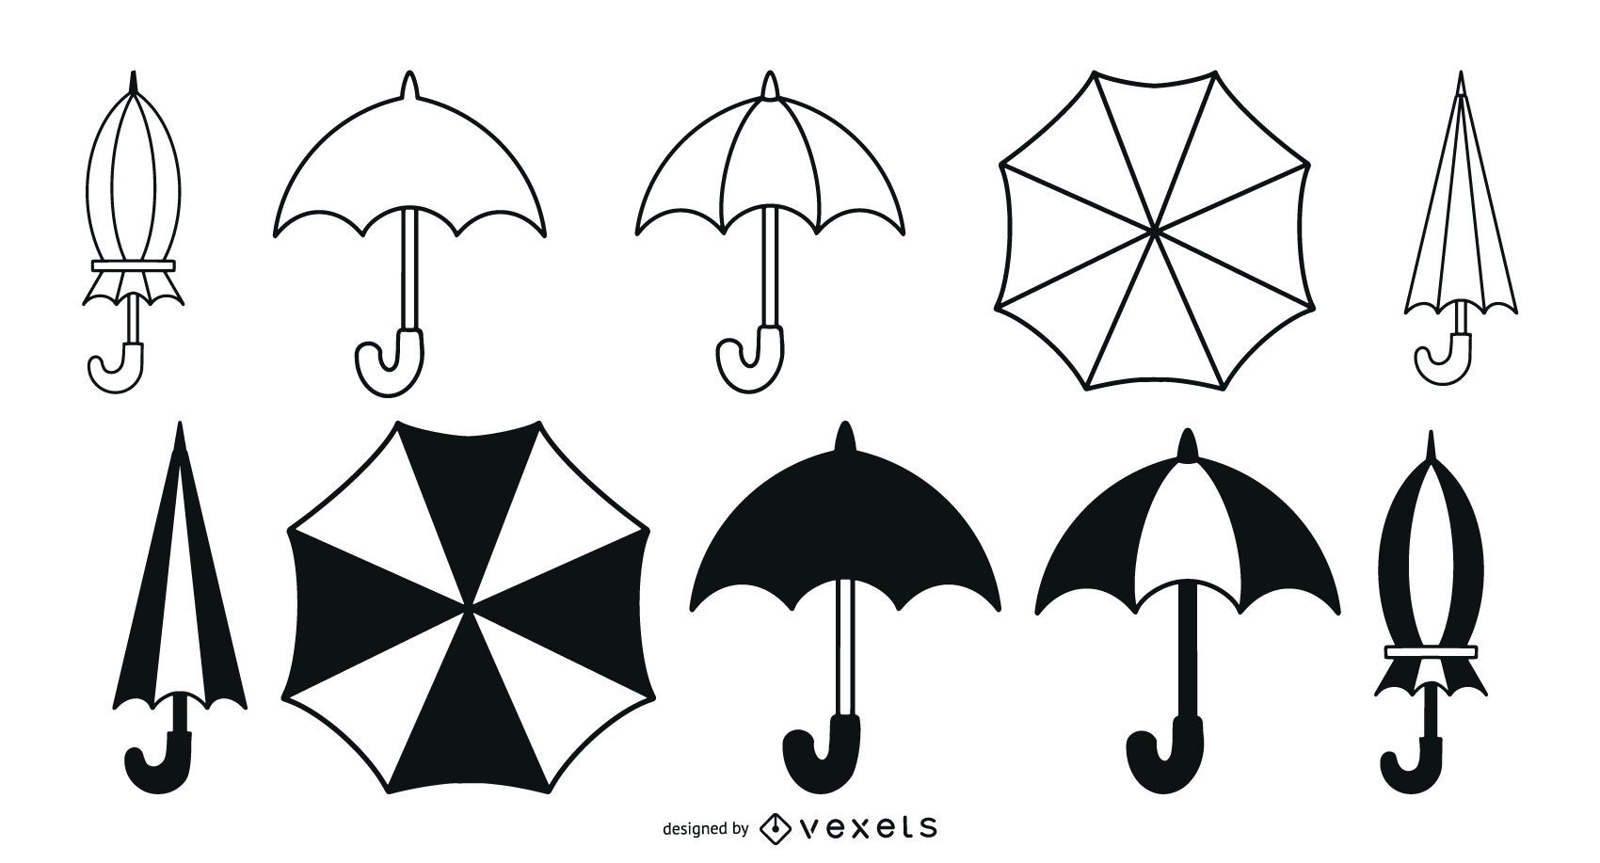 Umbrellas stroke pack